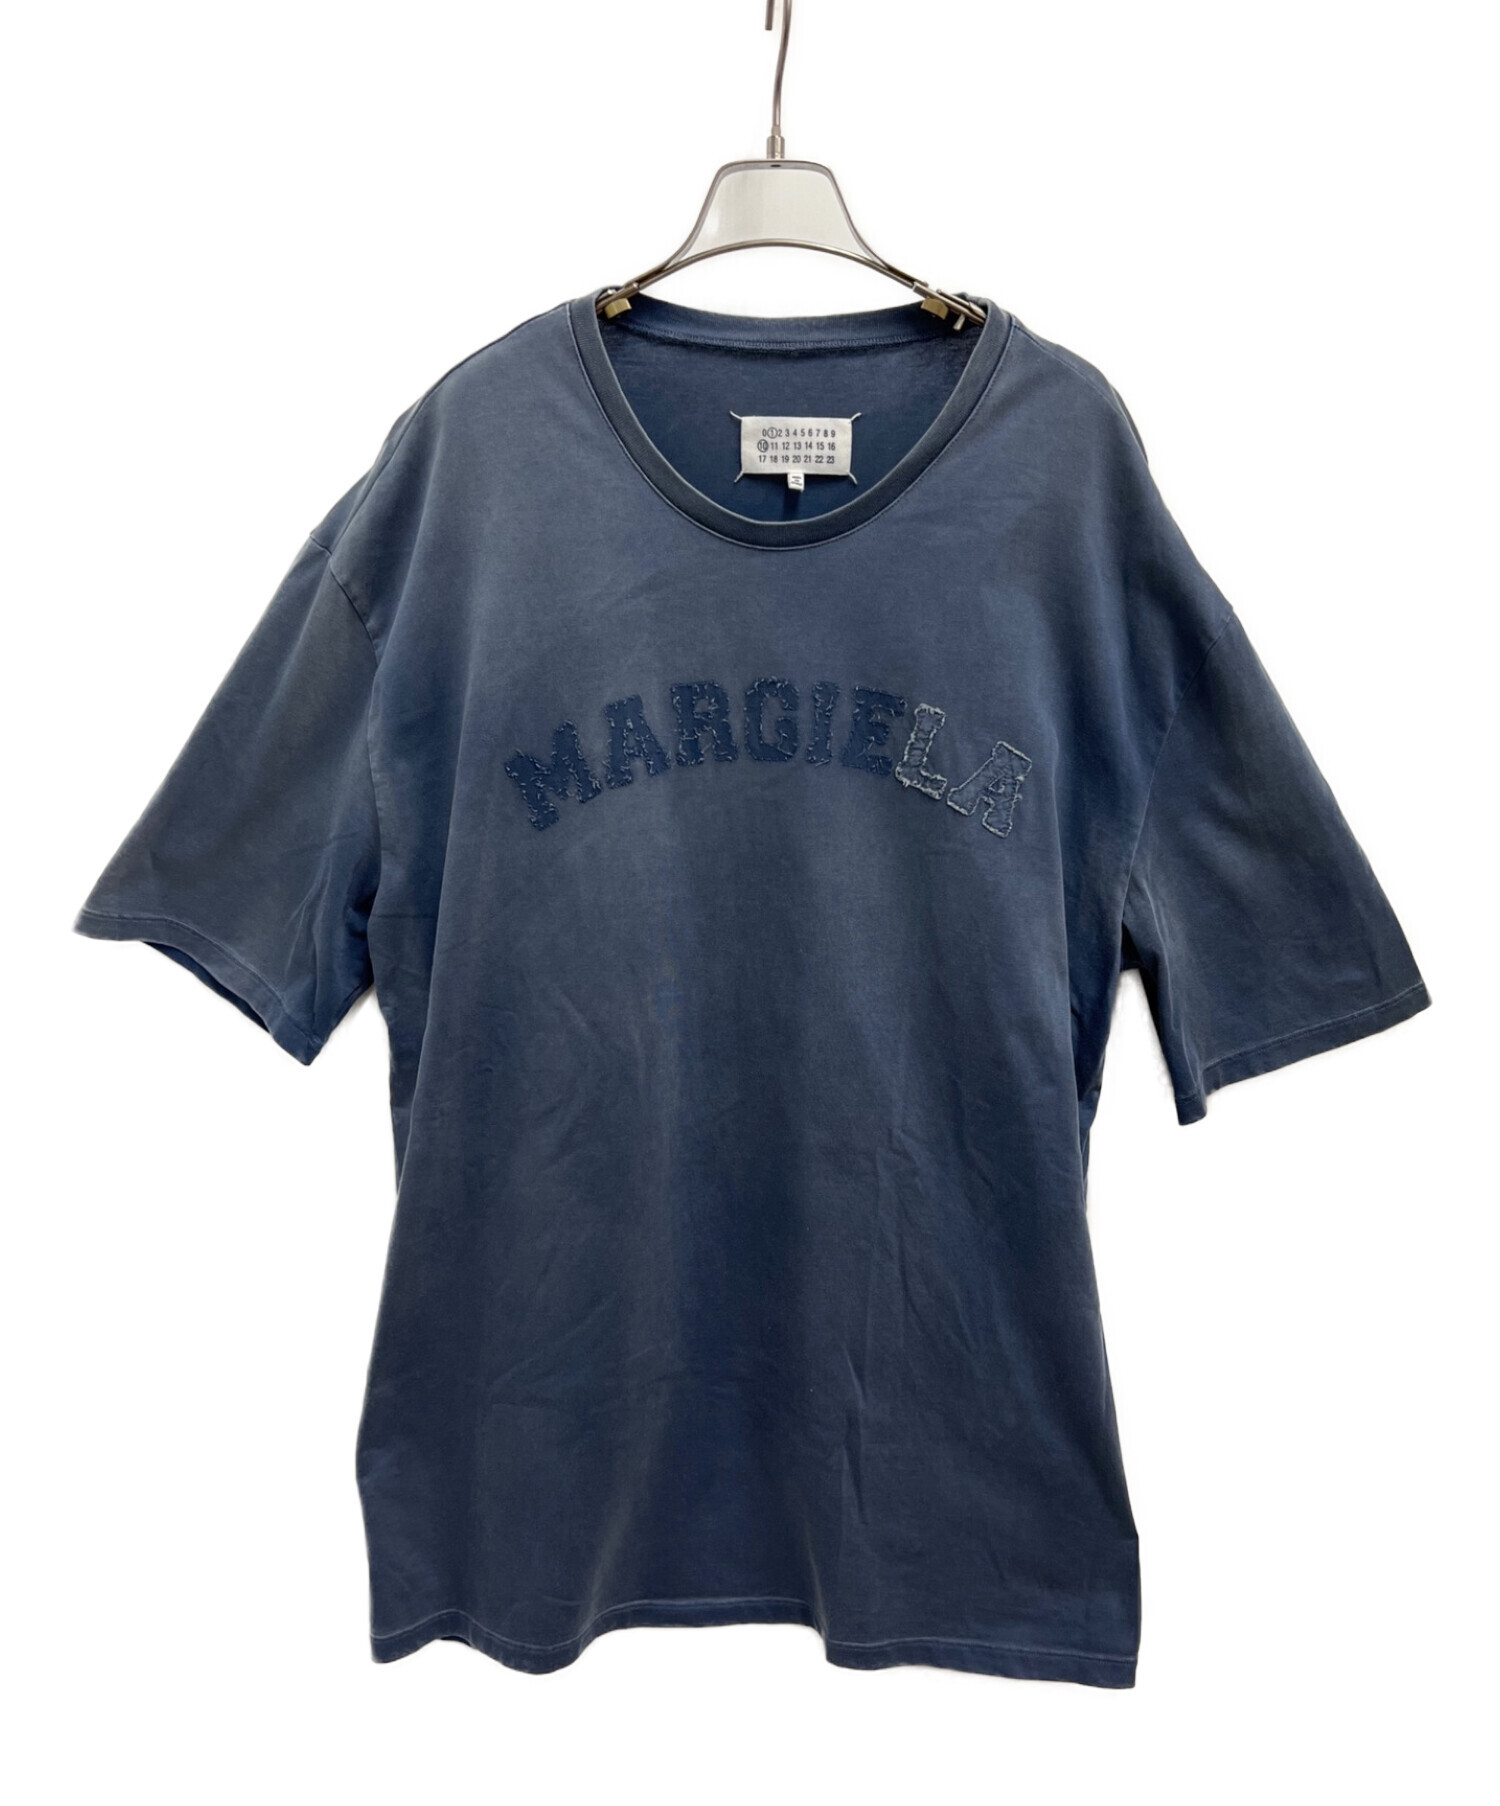 Maison Margiela (メゾンマルジェラ) オーバーサイズ オーバーダイ ロゴTシャツ インディゴ サイズ:M